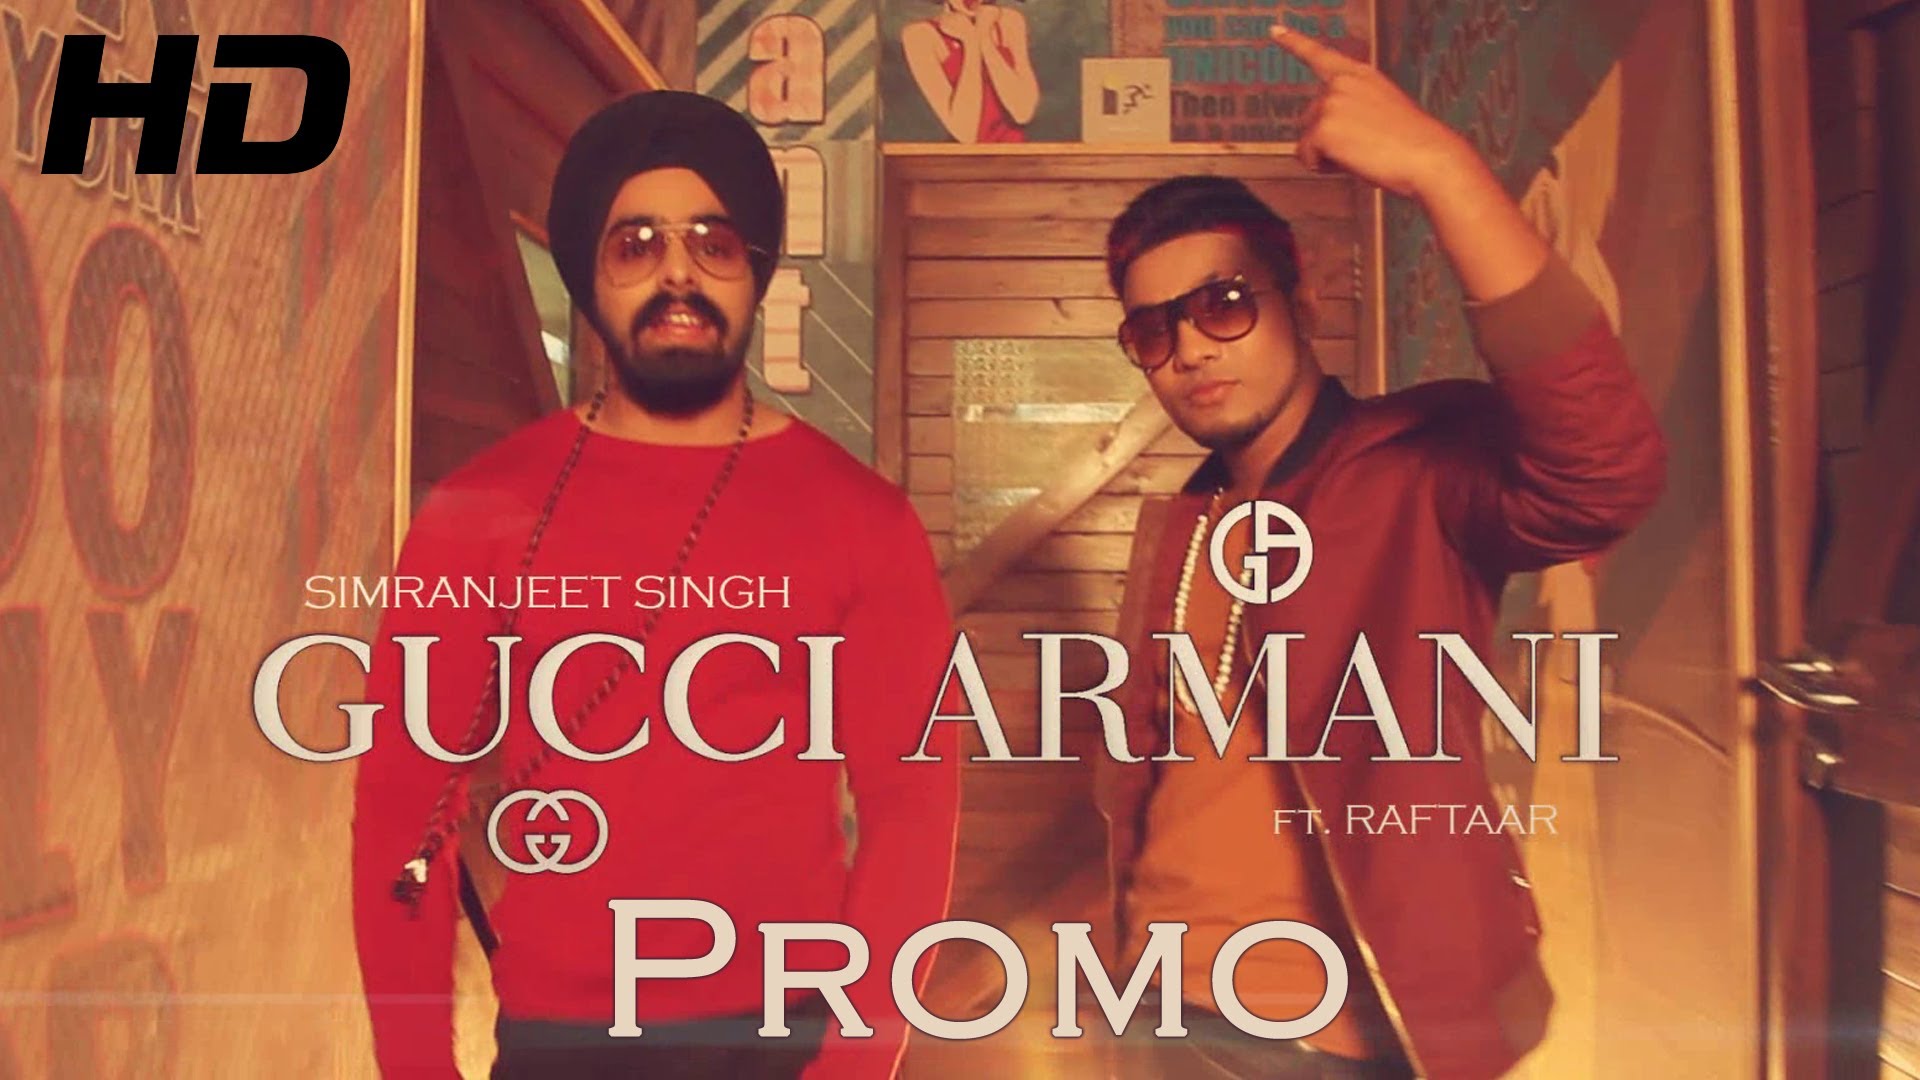 Gucci Armani - Simranjeet singh Feat. Raftaar (Promo) - Desi Hip Hop